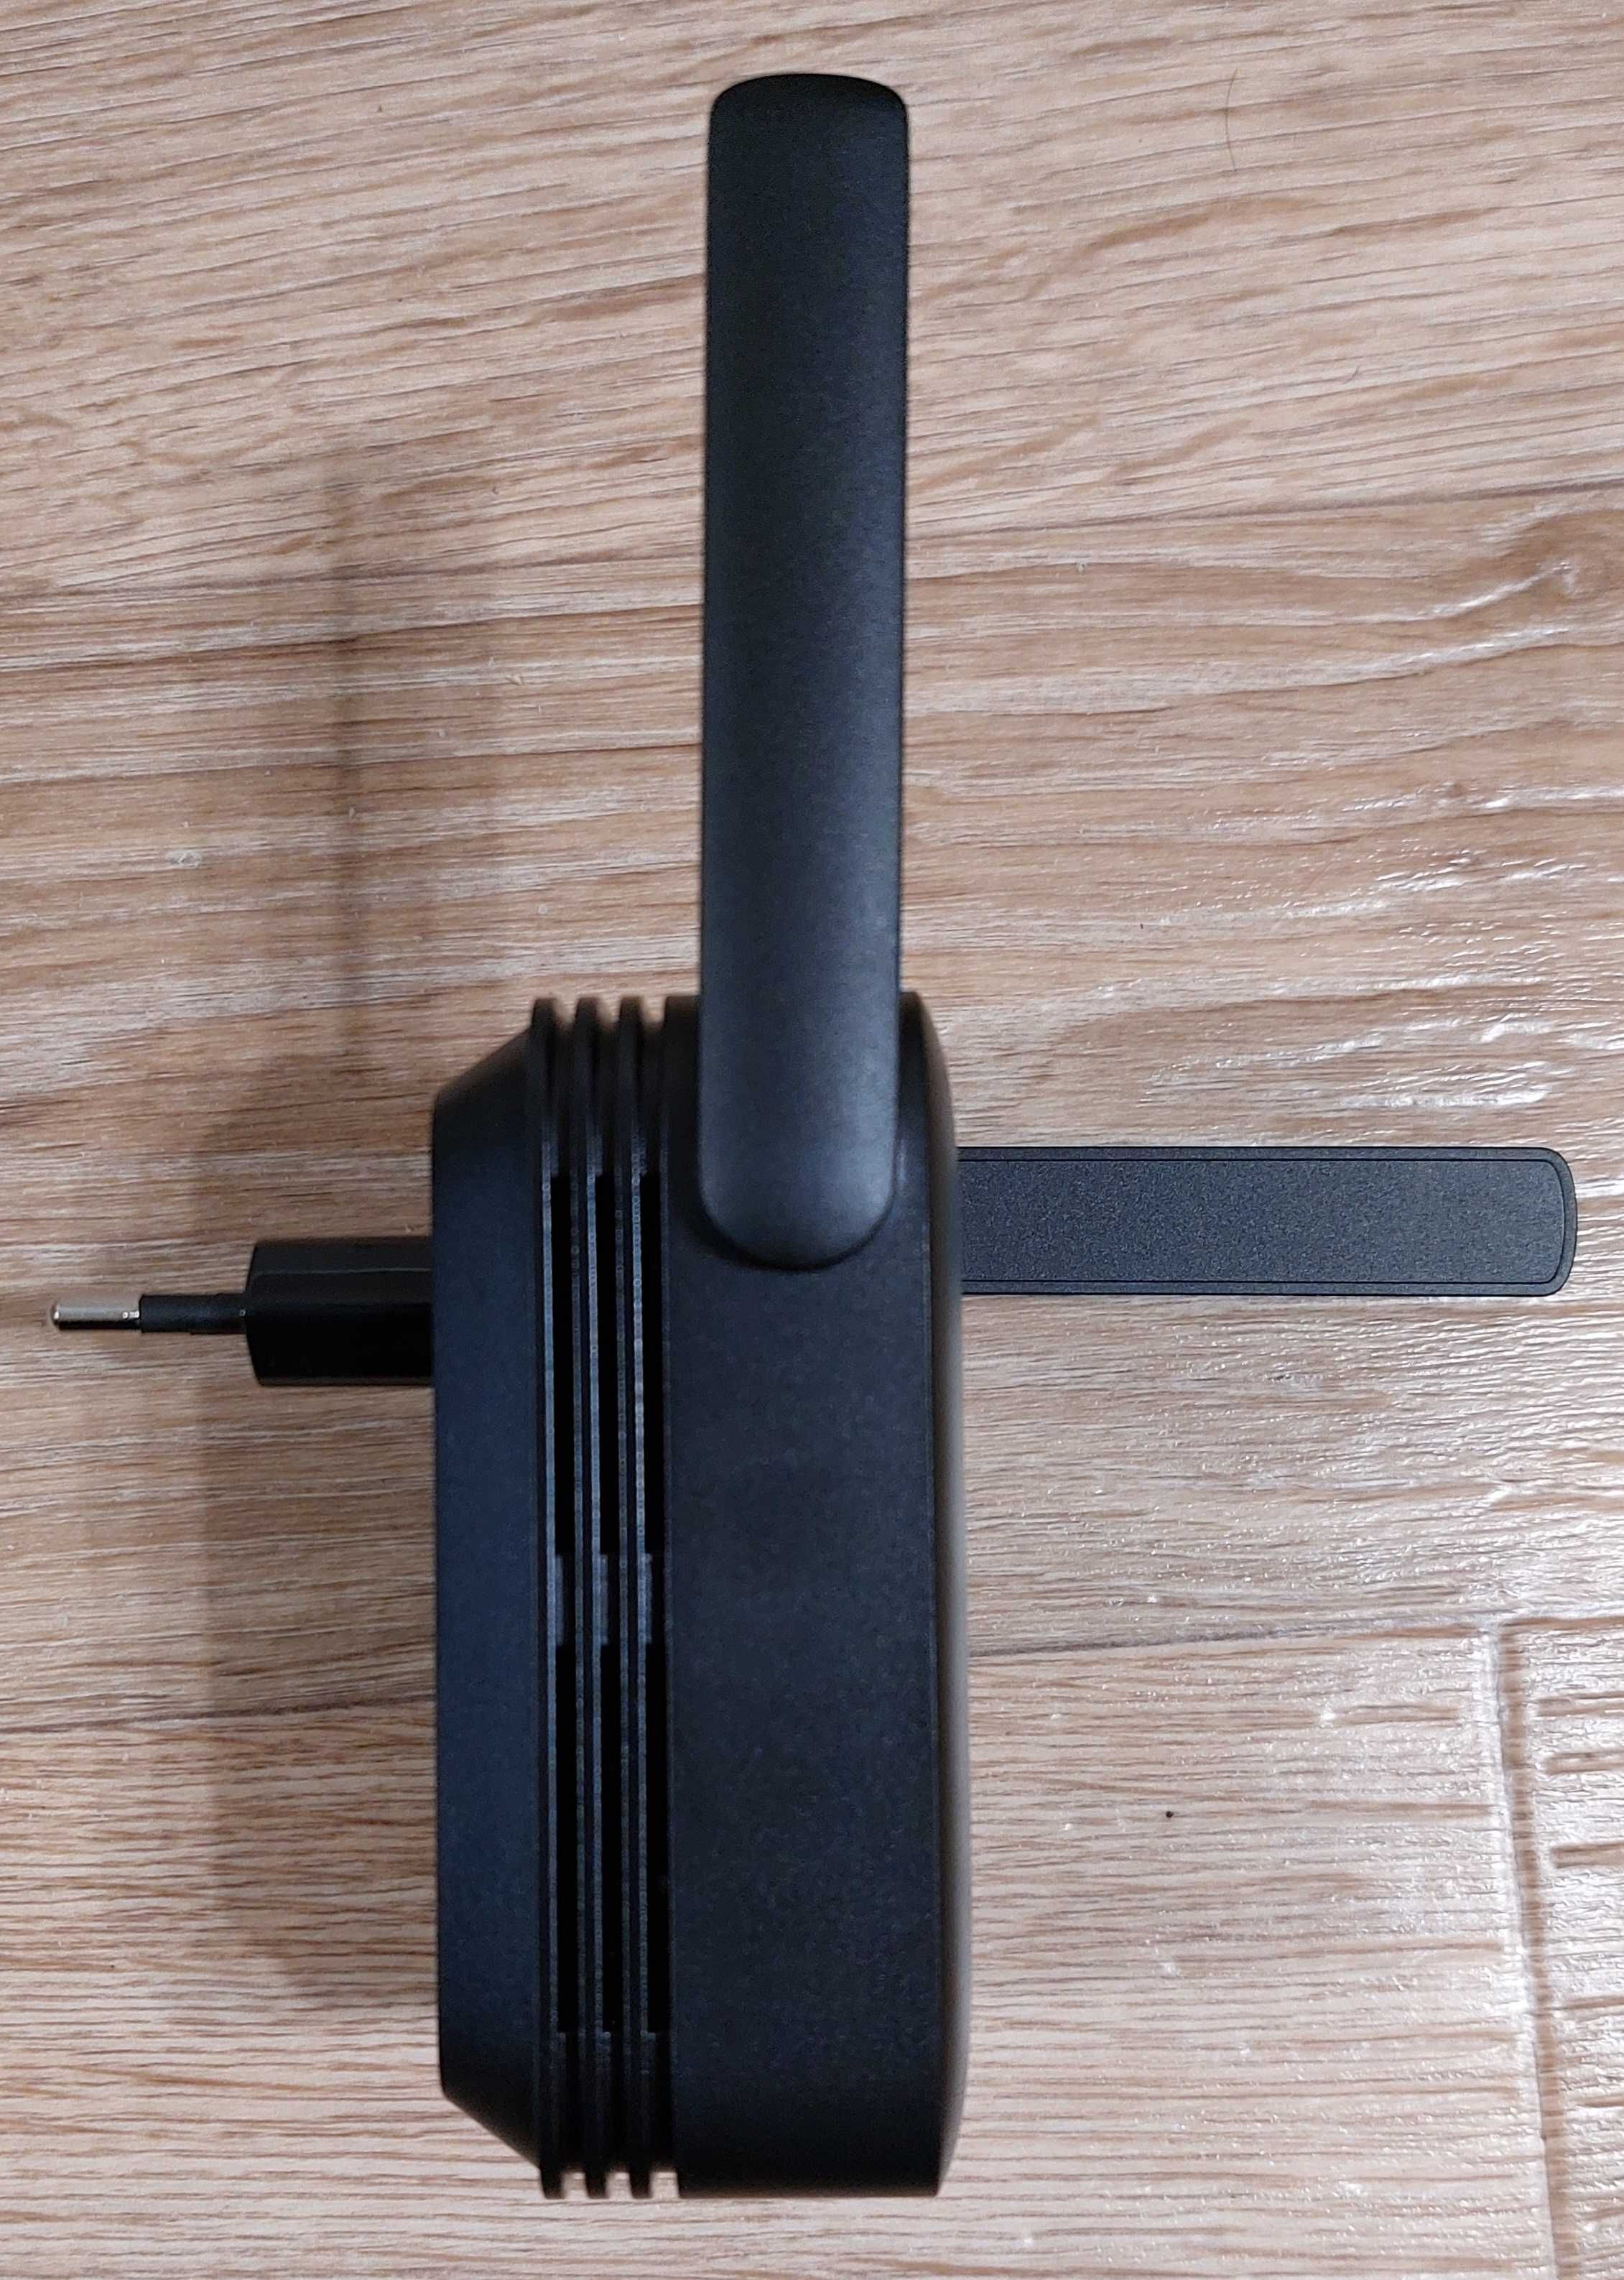 (НОВЫЙ) WI-FI Репитер Xiaomi
Mi Range Extender AC1200 Ретранслятор